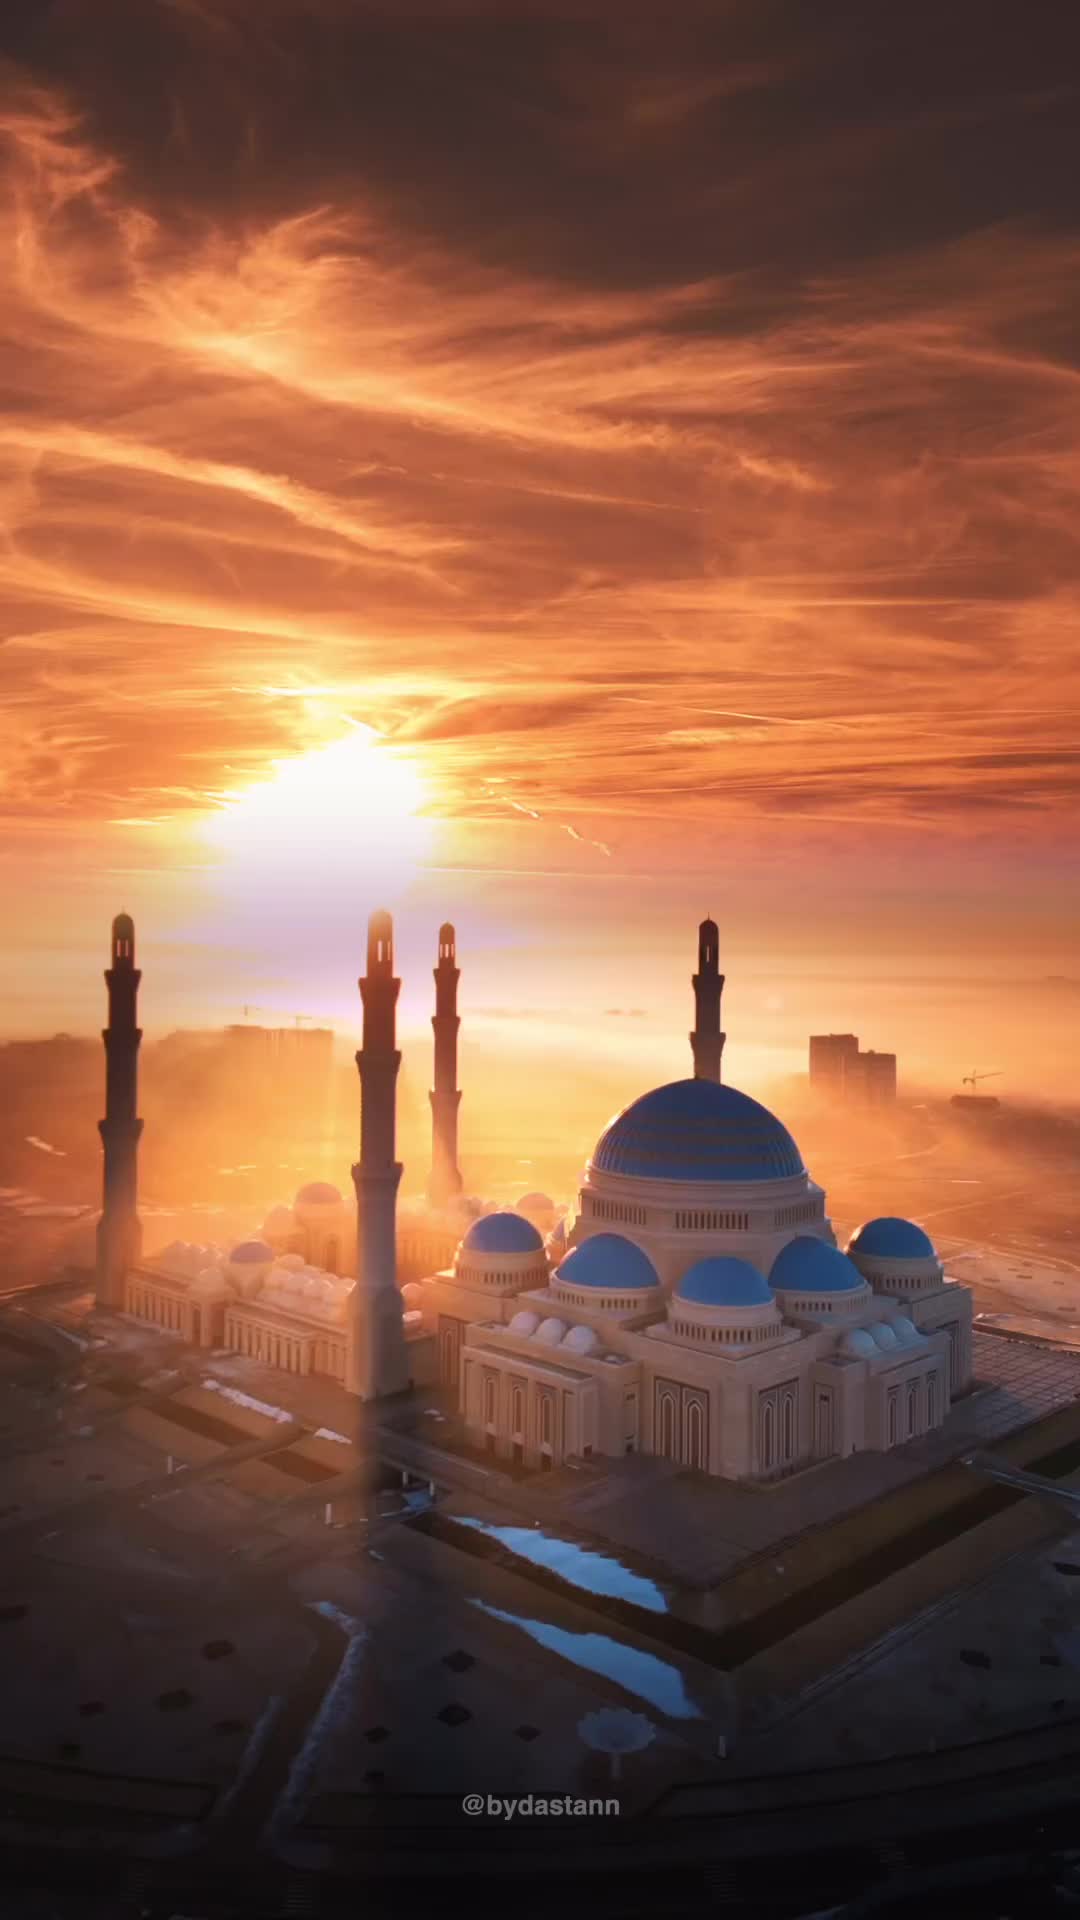 Ramadan Kareem in Astana's Grand Mosque